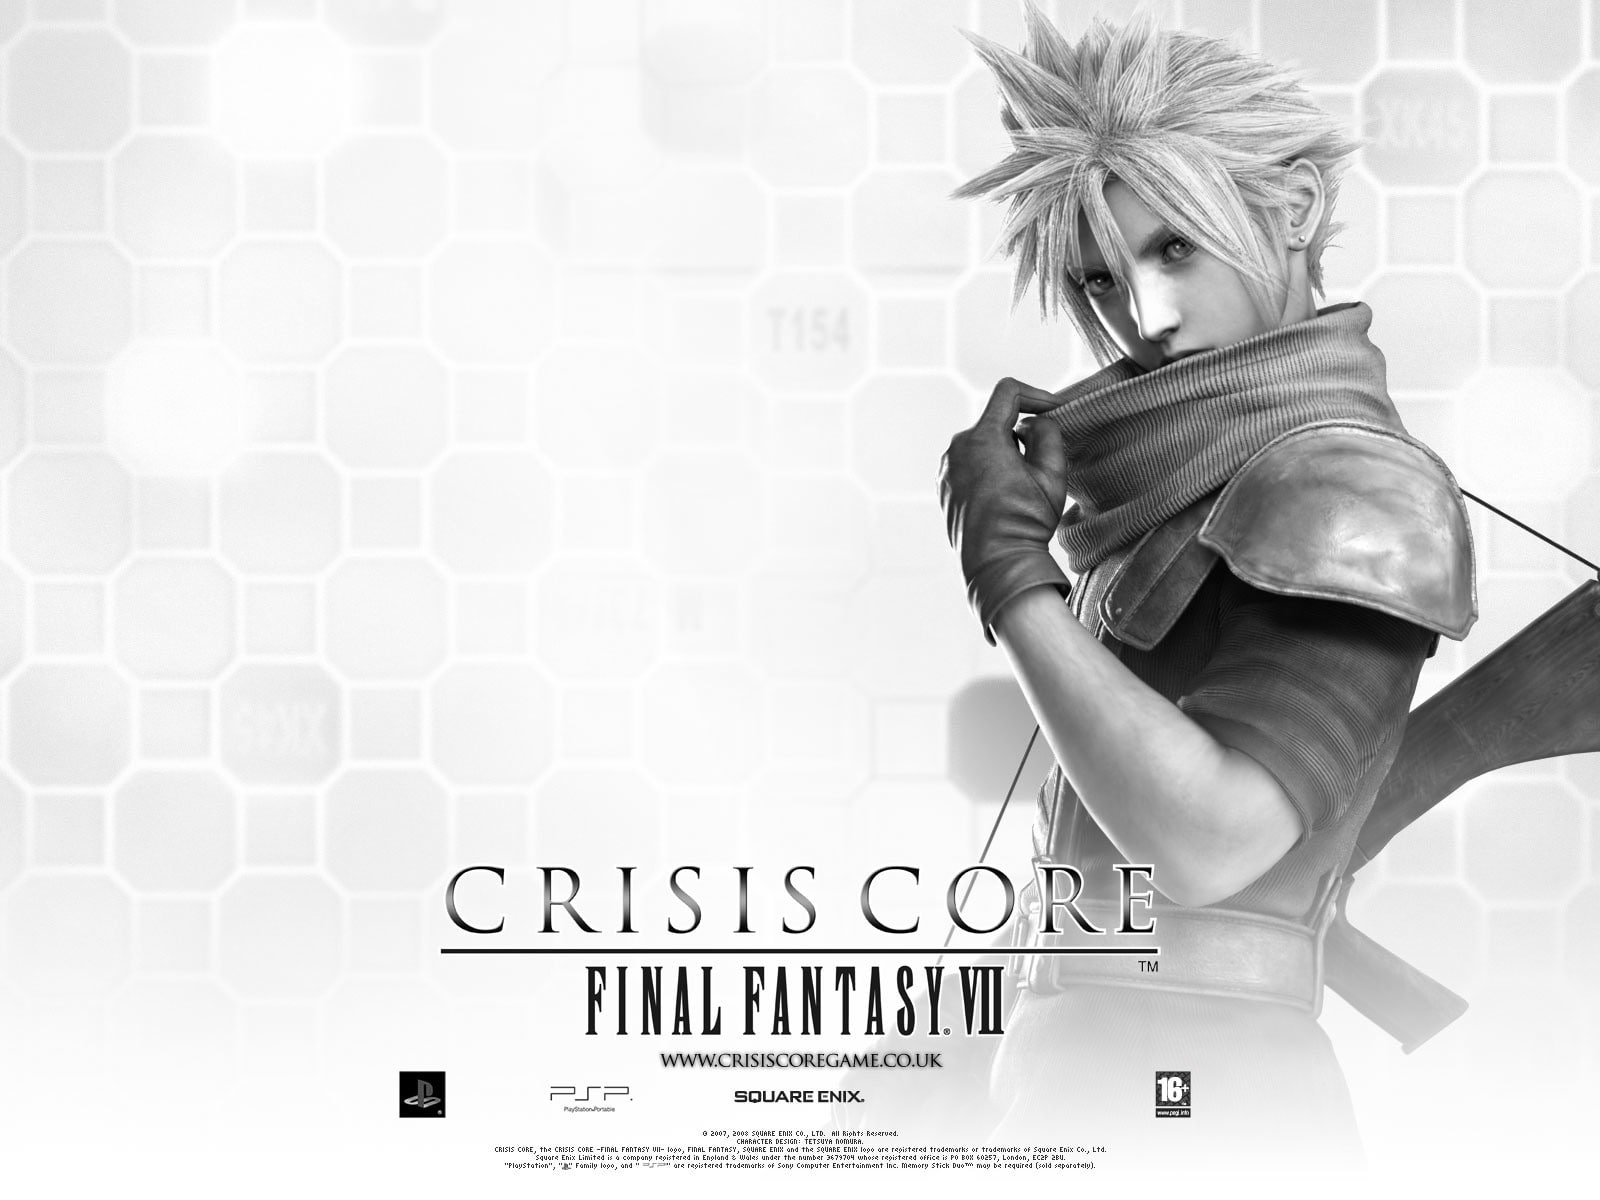 Final Fantasy, video games, Final Fantasy VII